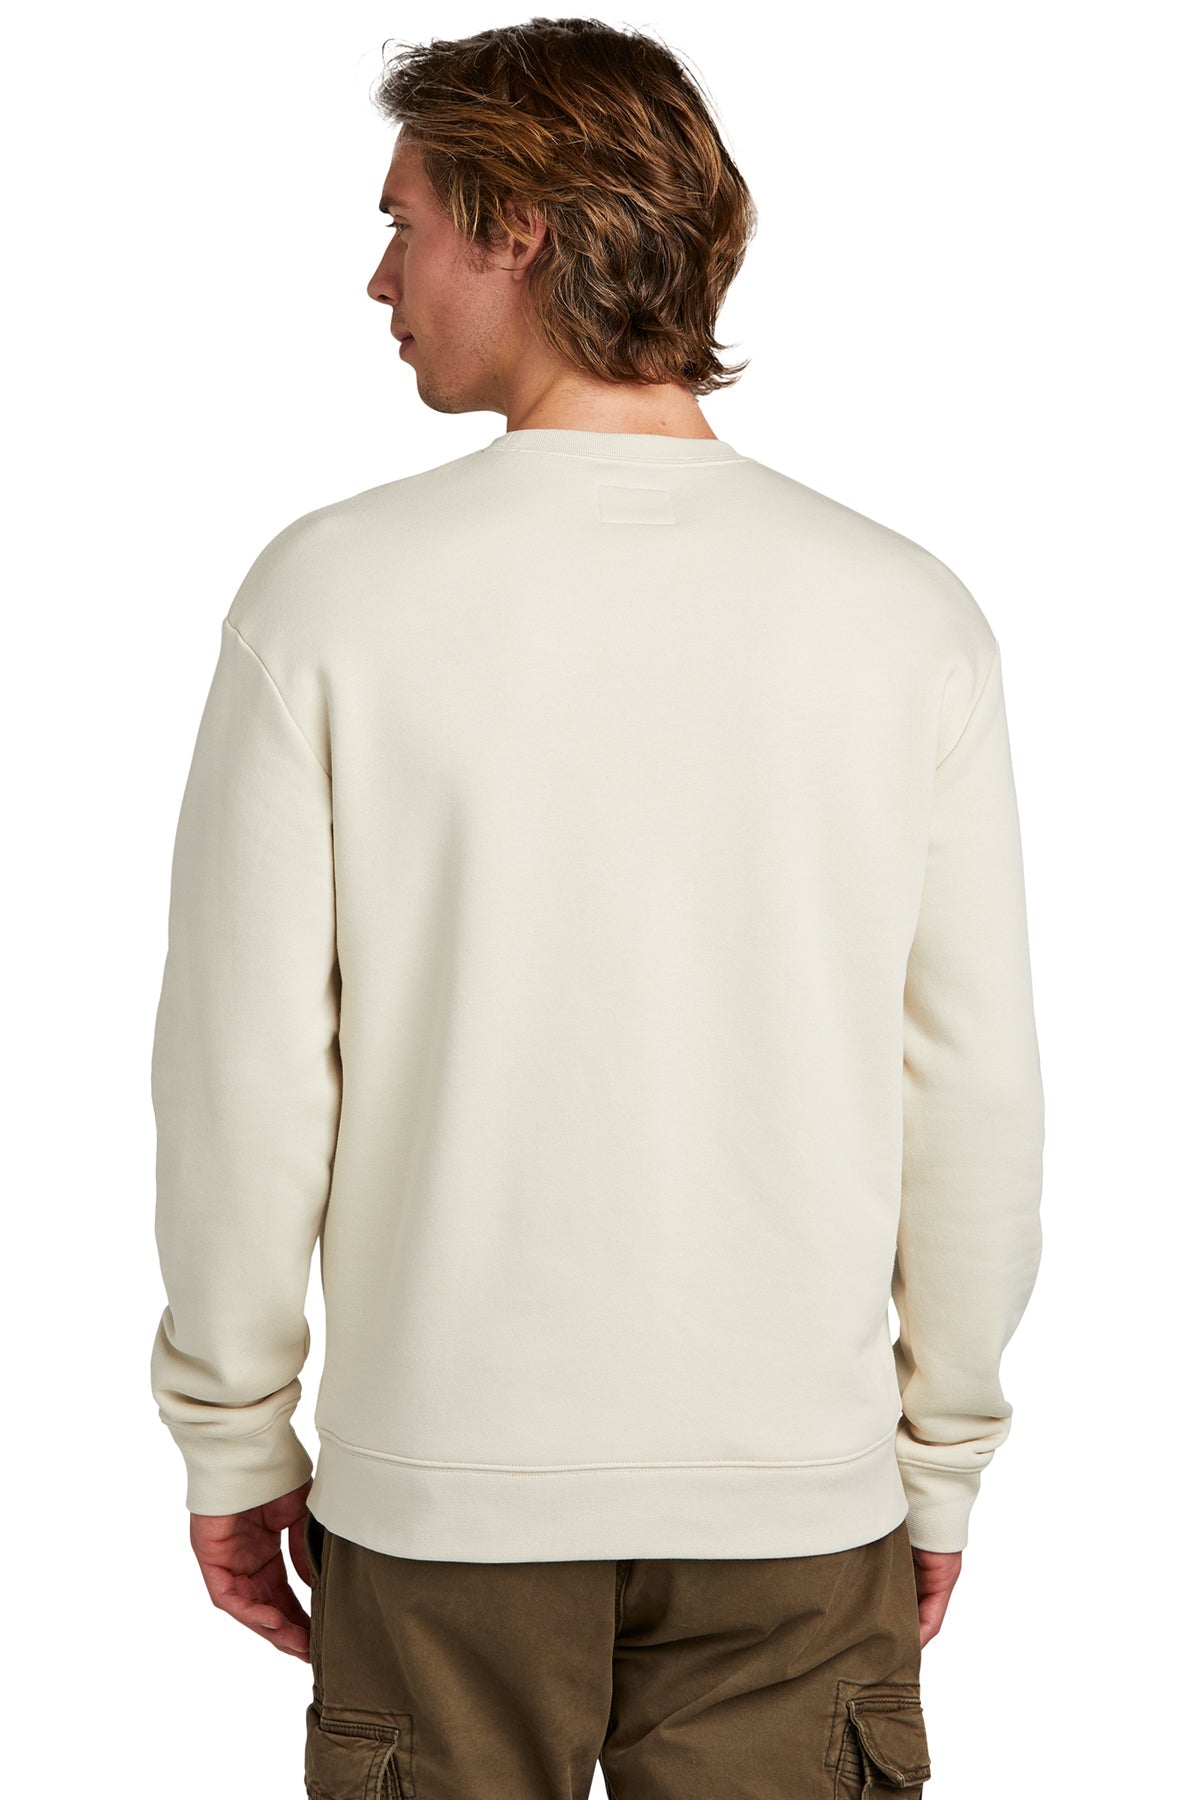 New Era Heritage Fleece Custom Pocket Sweatshirts, Soft Beige